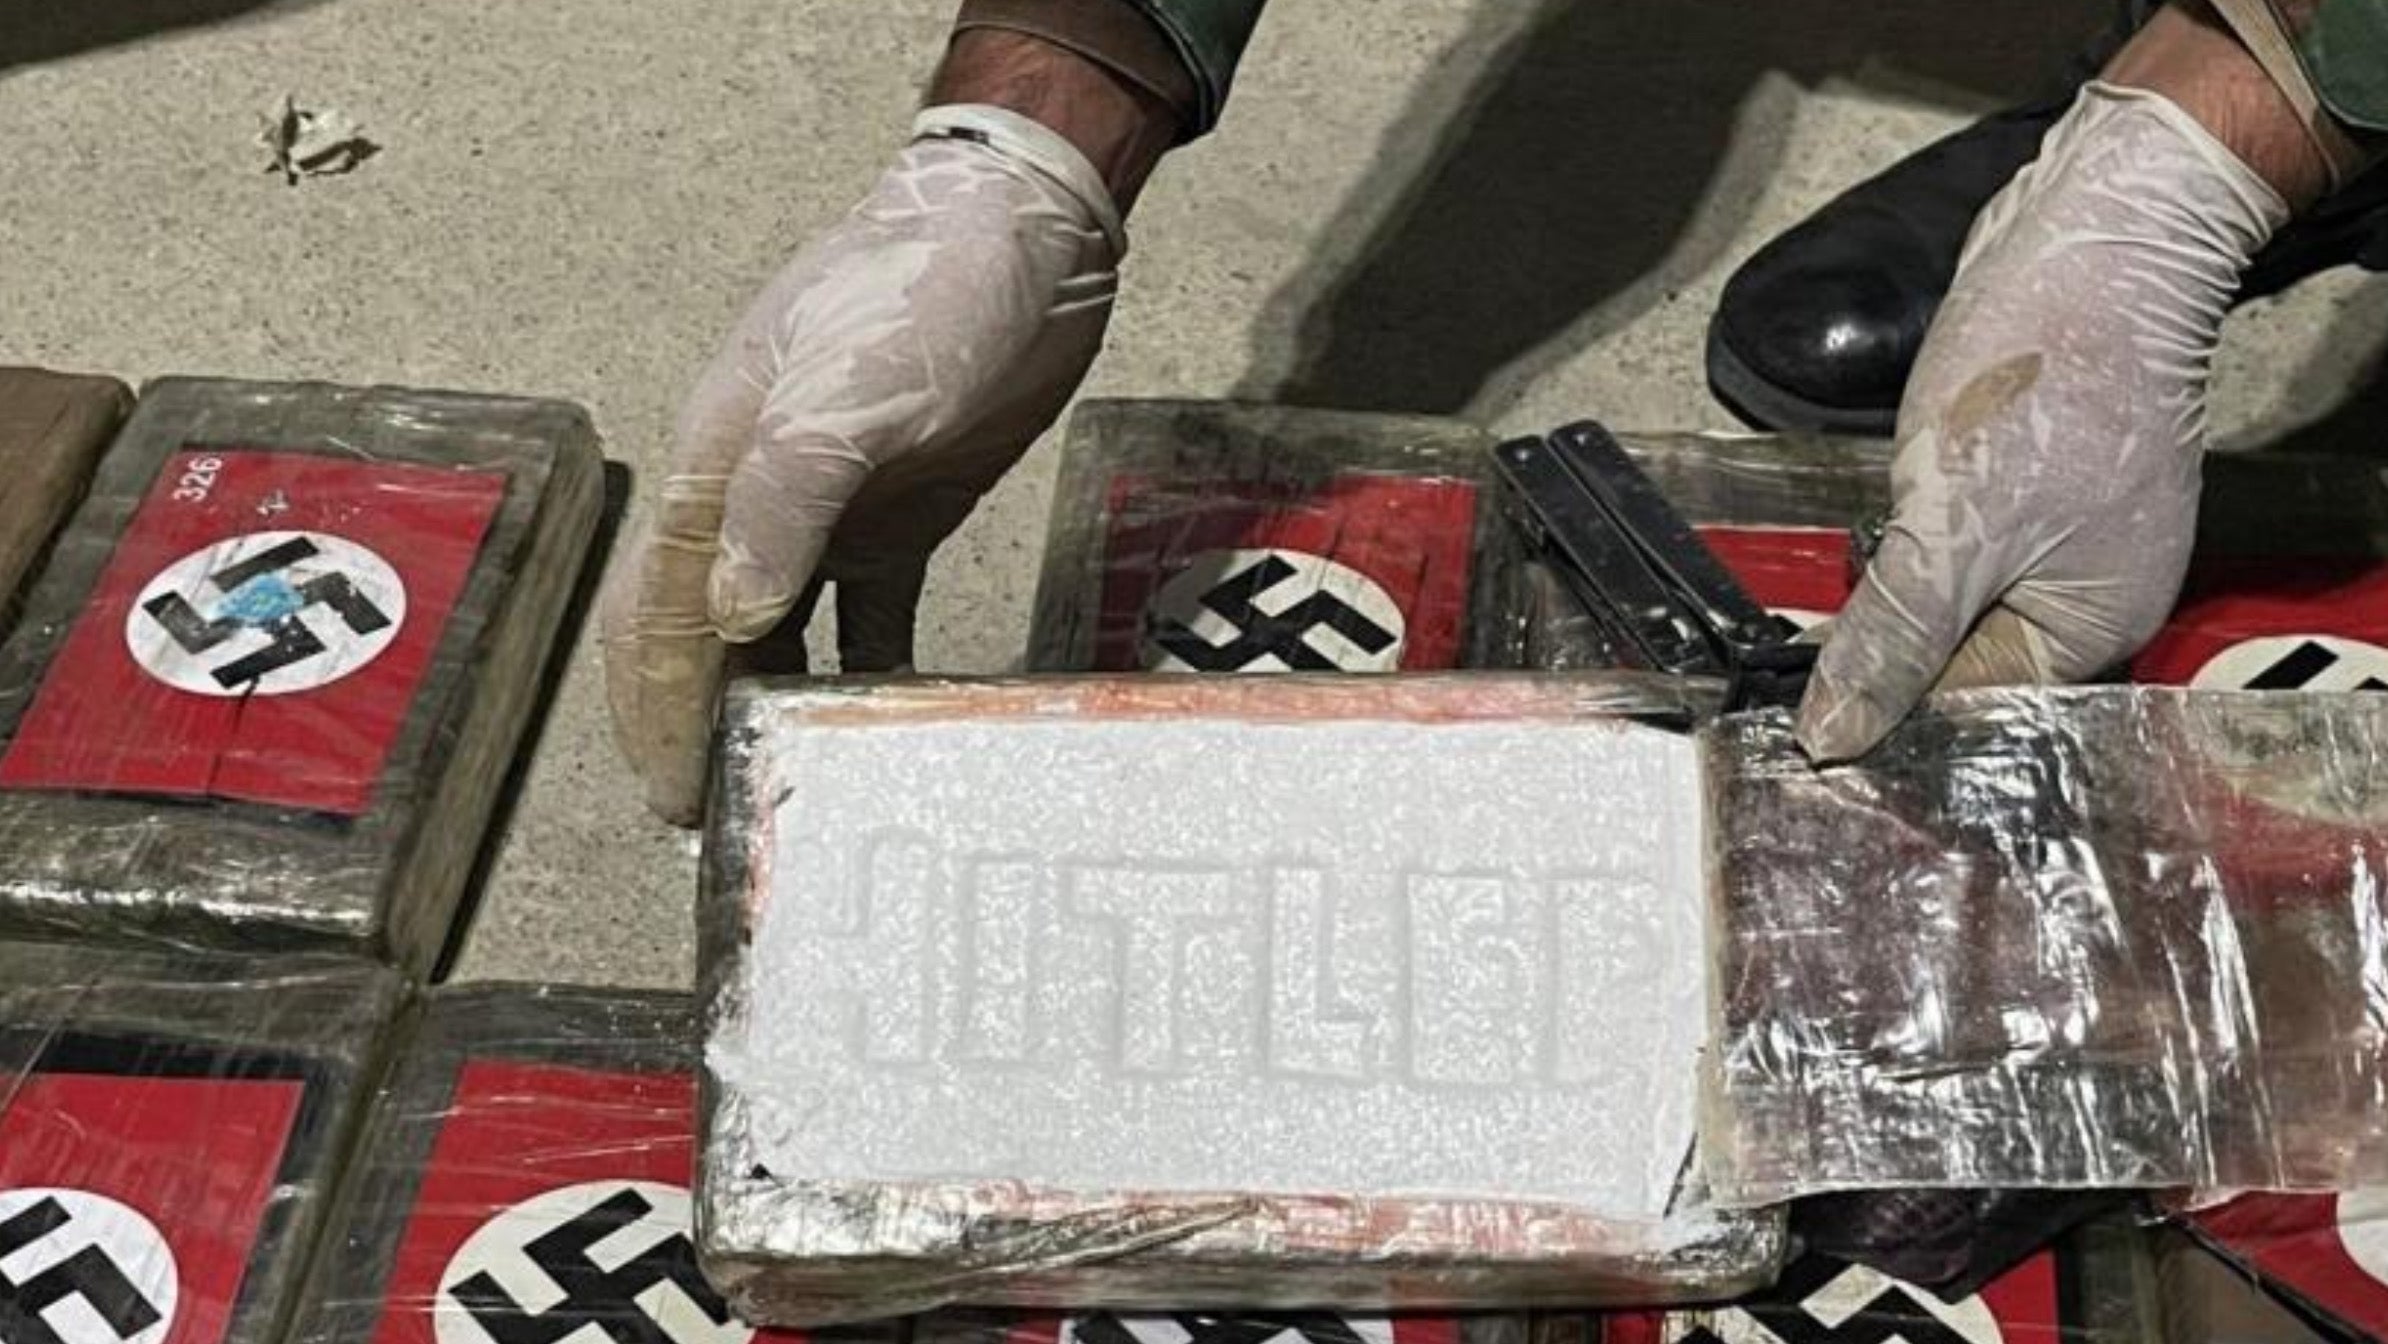 Peru seizes “Hitler cocaine” en route to Belgium, Magnate Daily